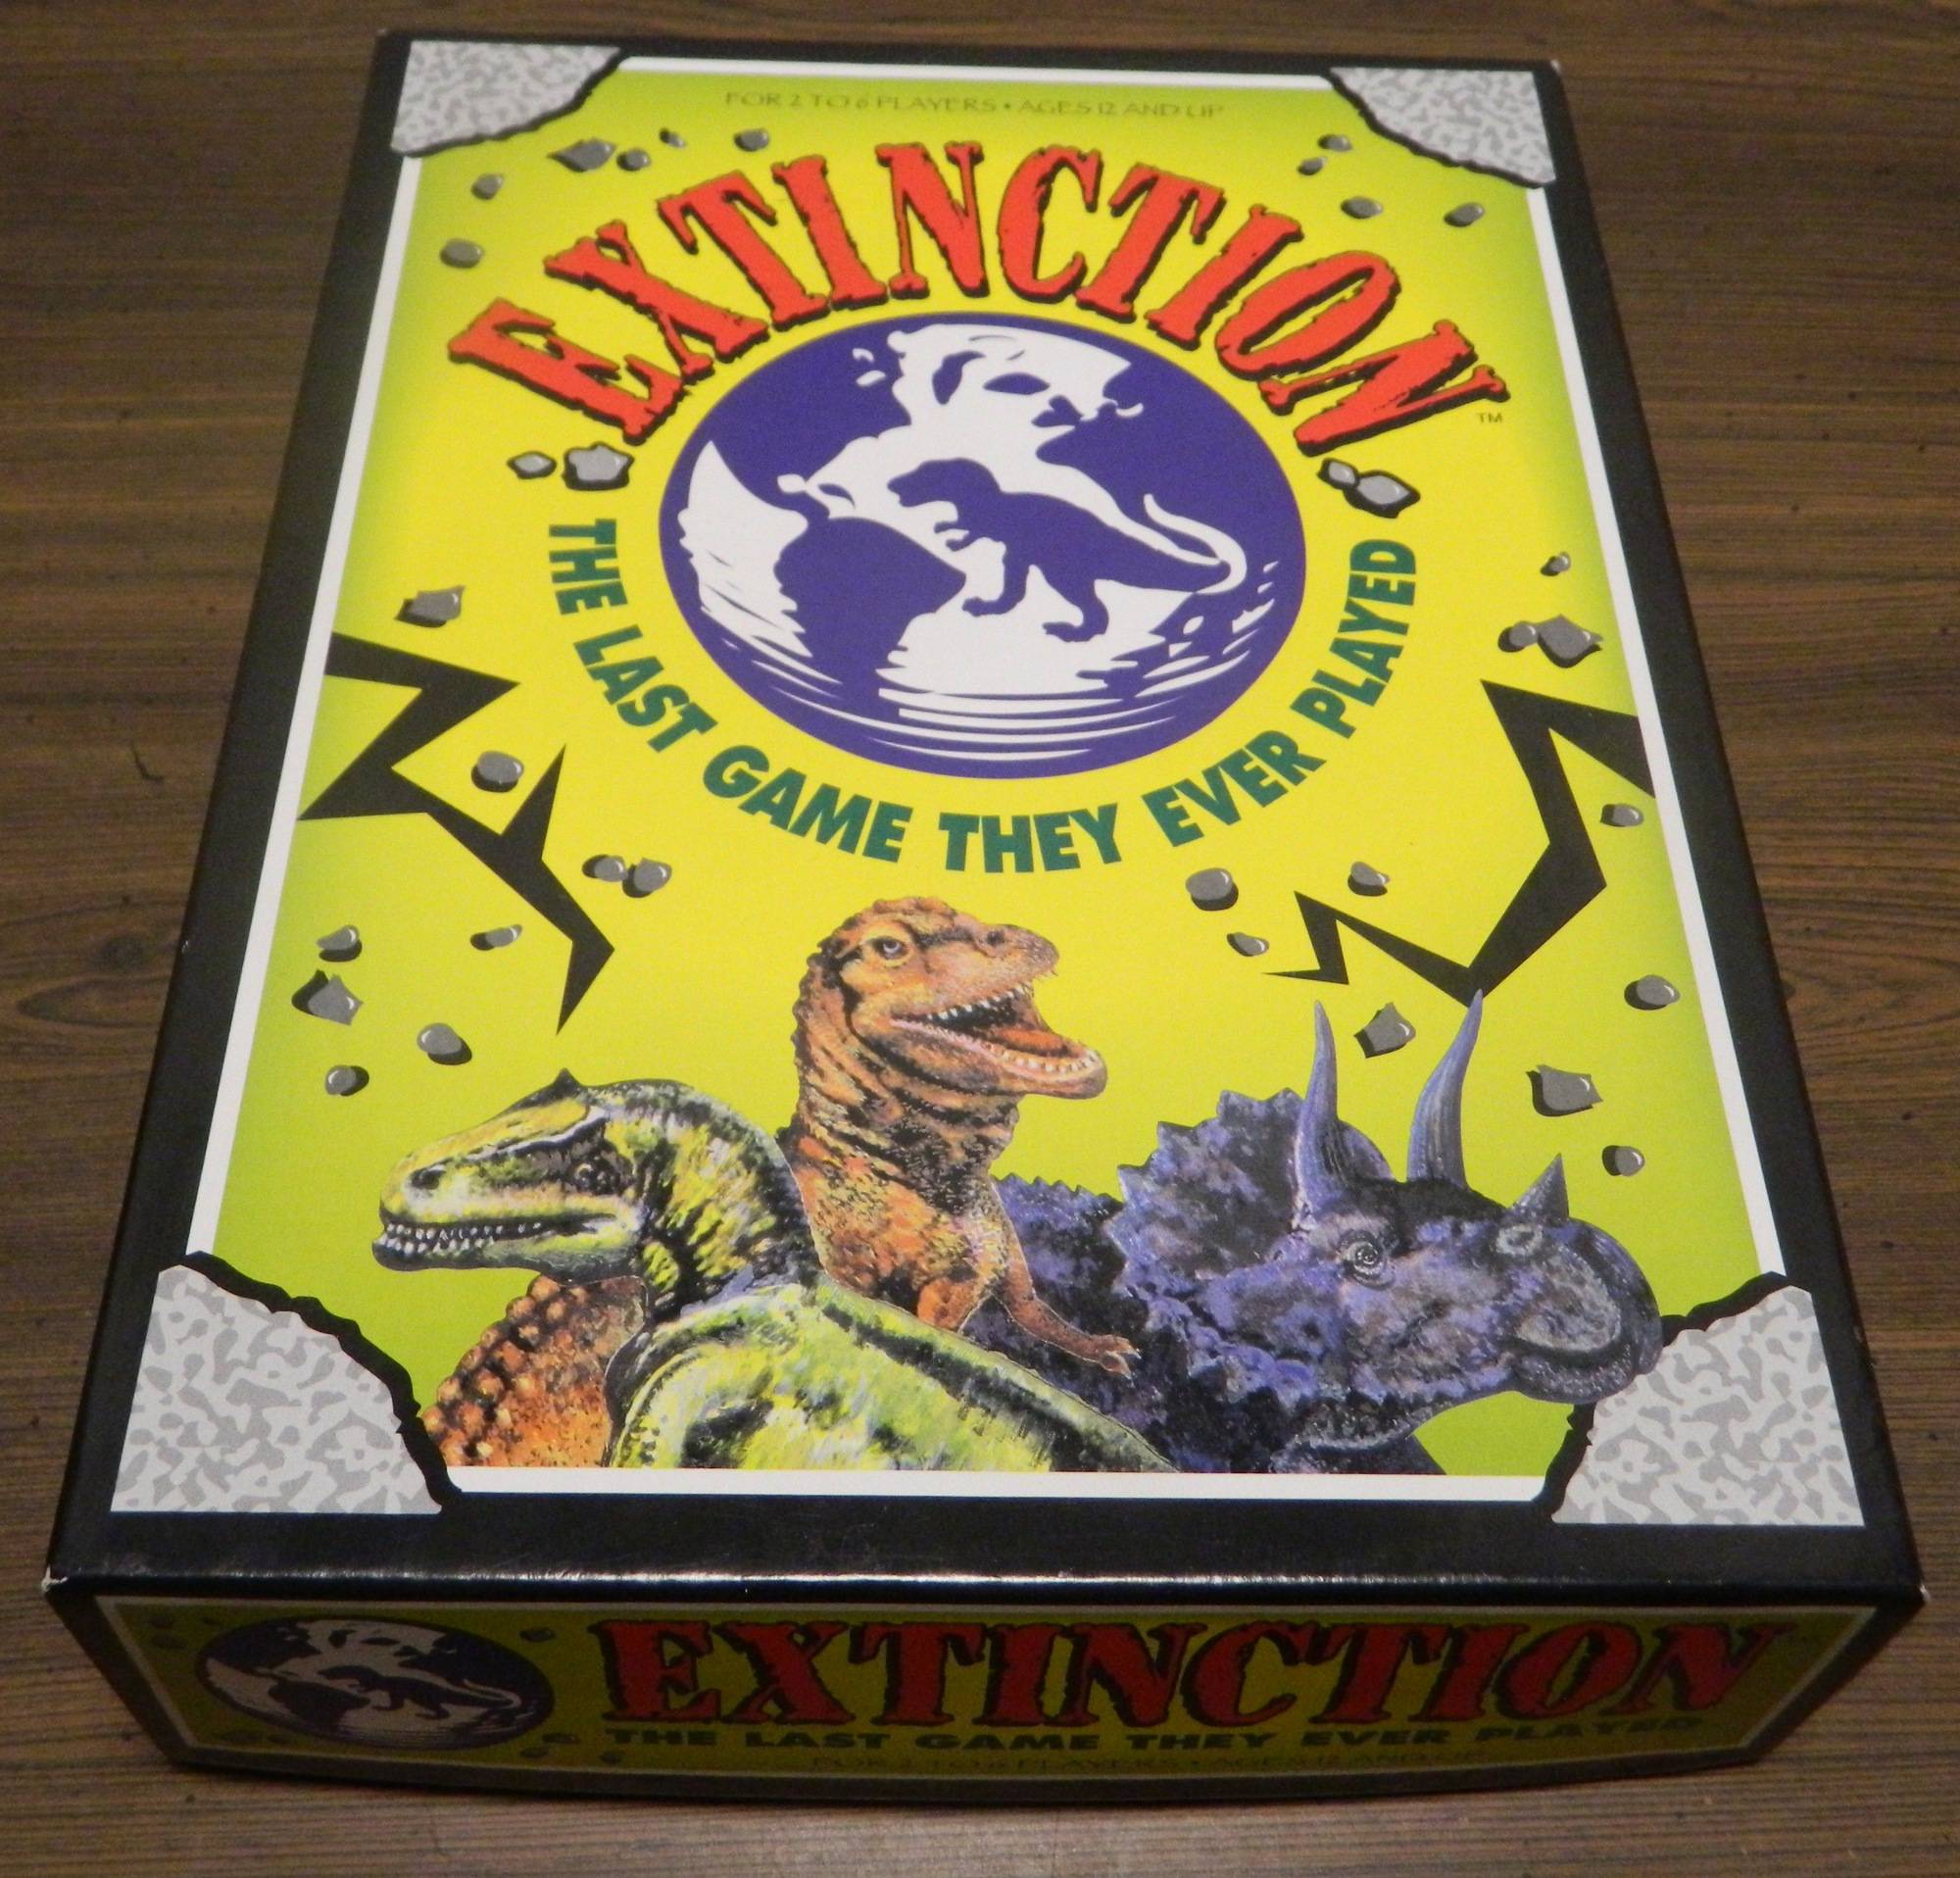 Box for Extinction